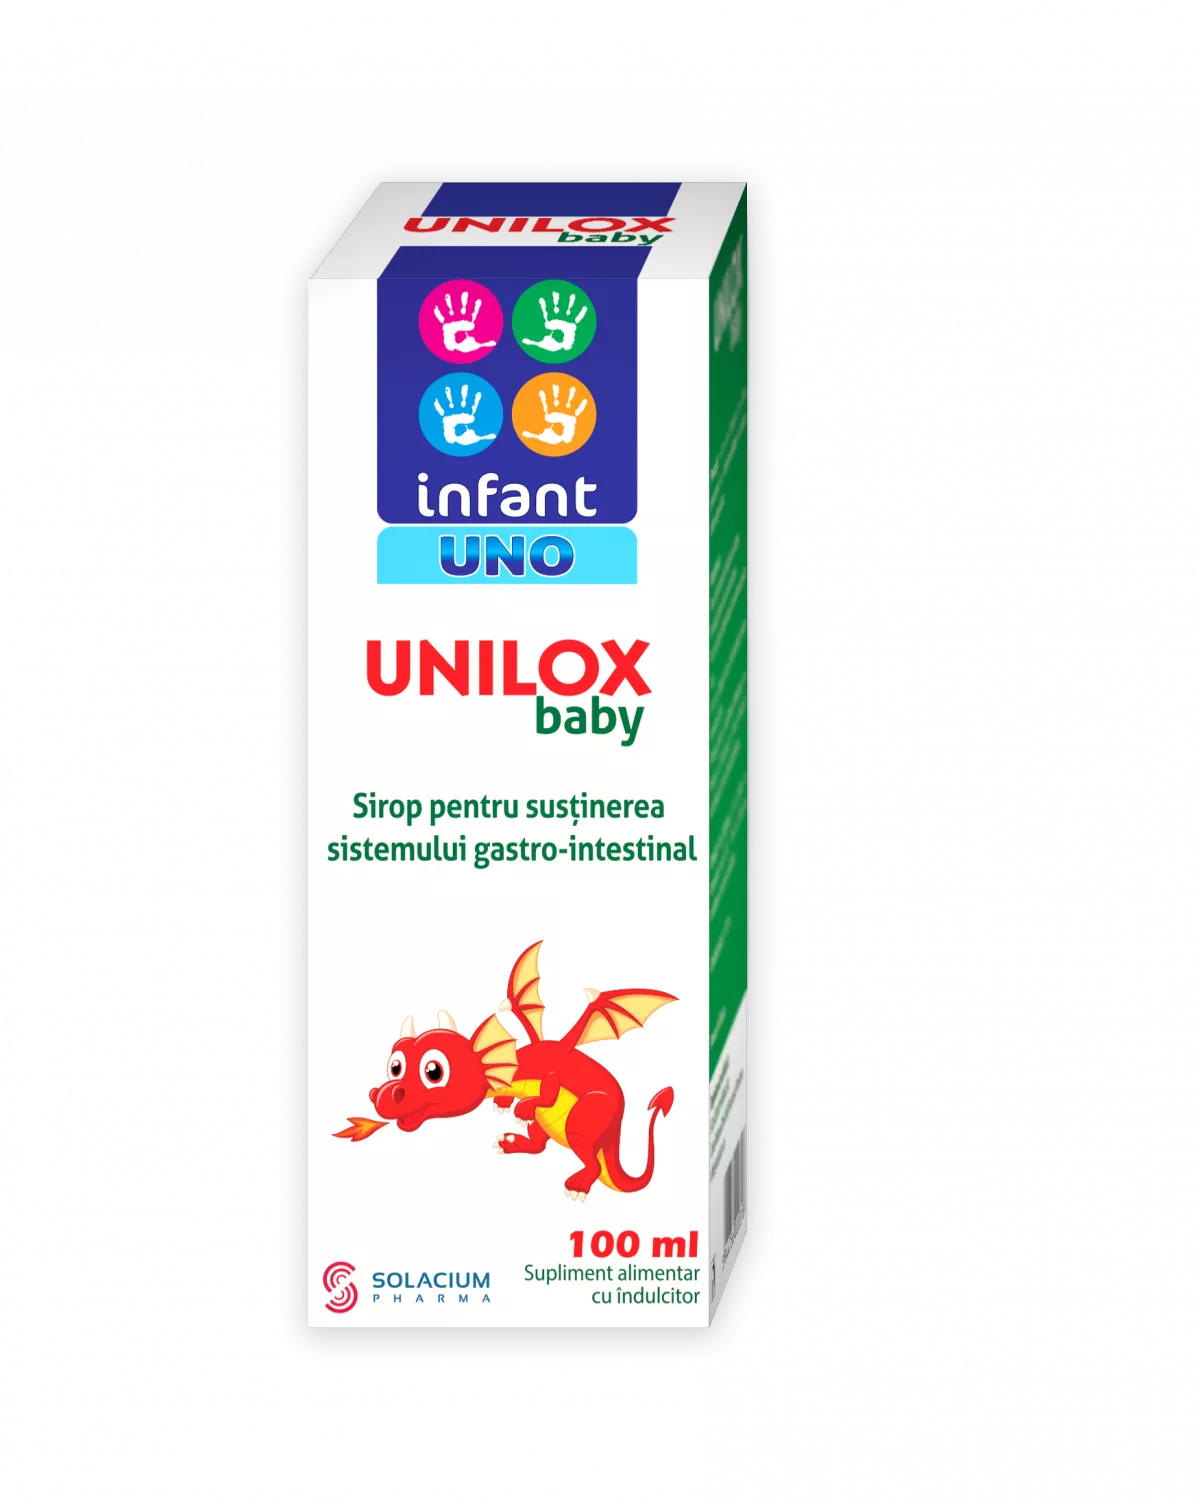 Infant Uno Unilox baby sirop x 100ml, [],remediumfarm.ro